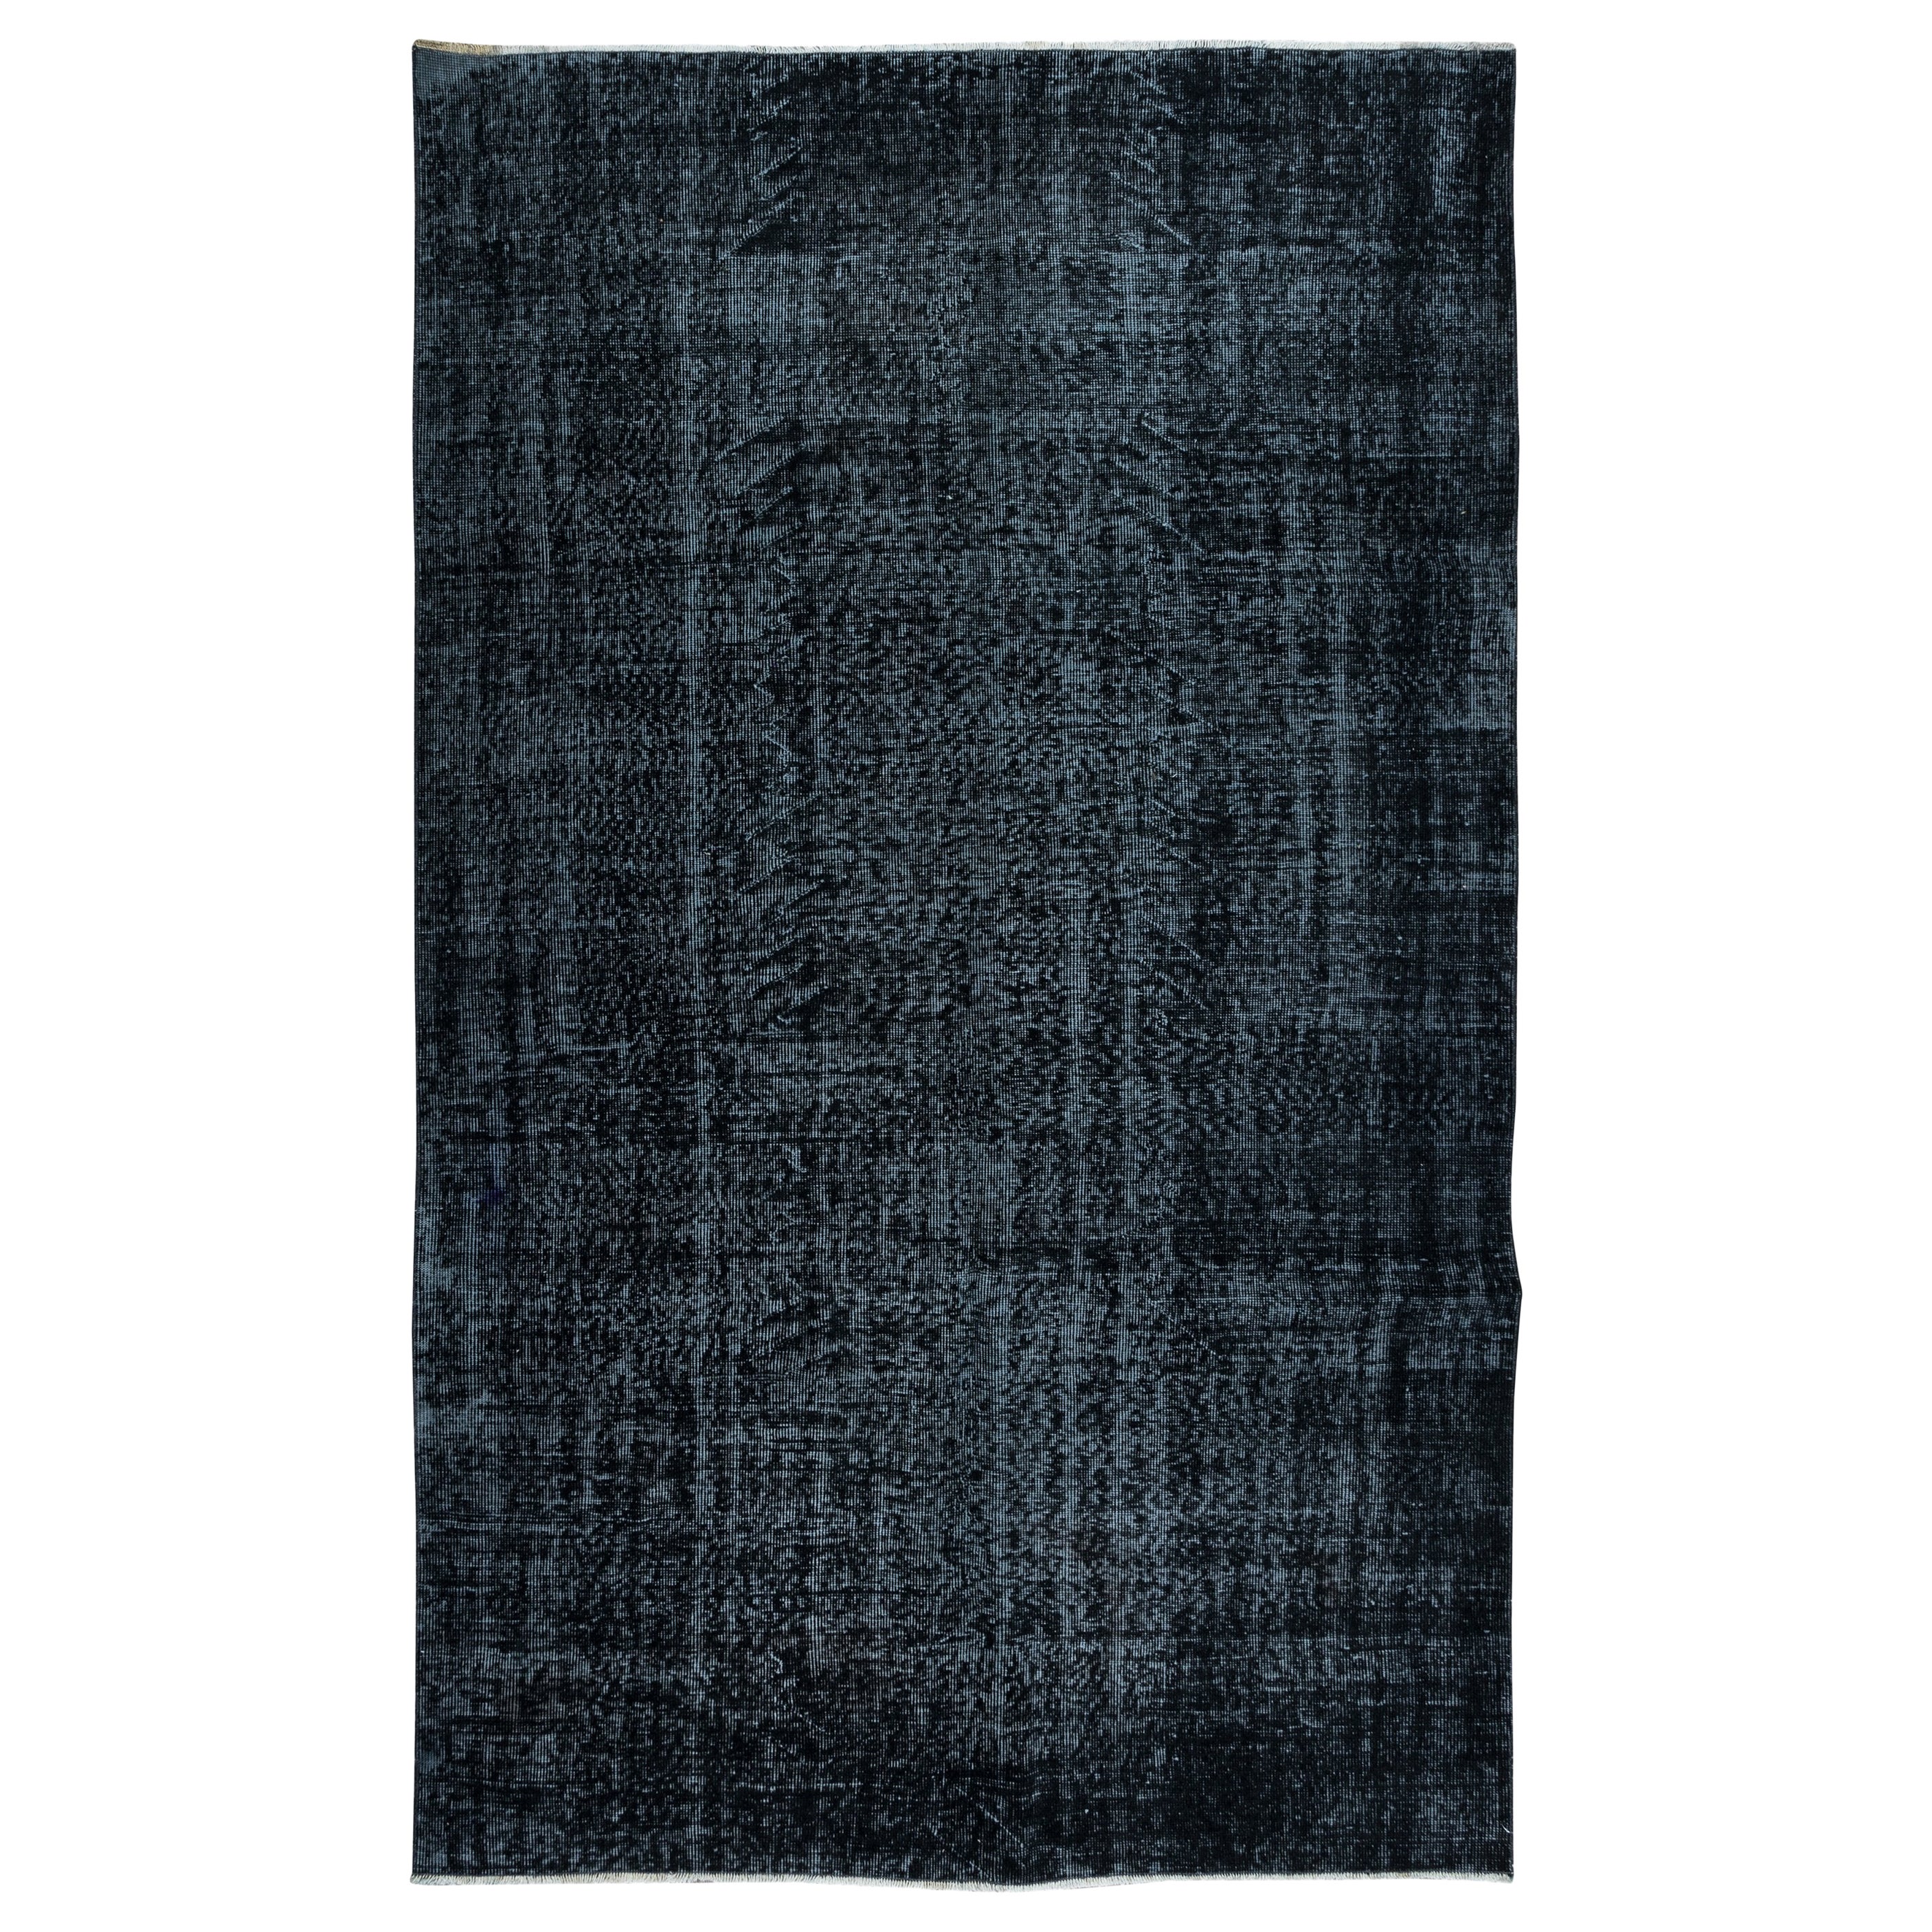 5.3x8.7 Ft Handmade Turkish Modern Wool Area Rug in Black & Bluish Black For Sale